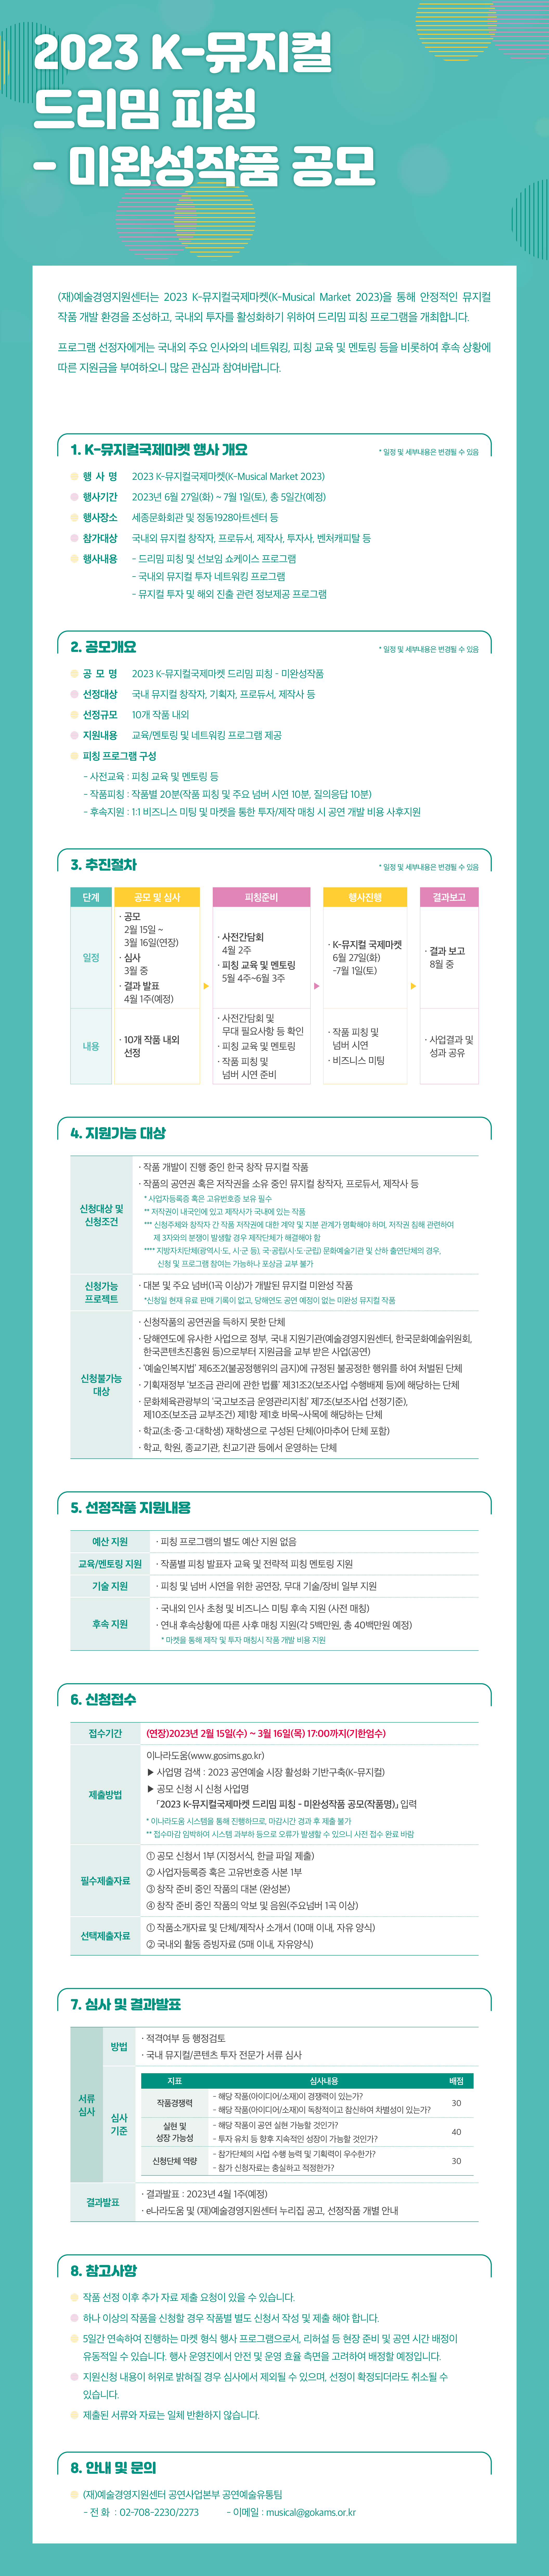 2023 K-뮤지컬국제마켓 드리밈 피칭 - 미완성작품 공모